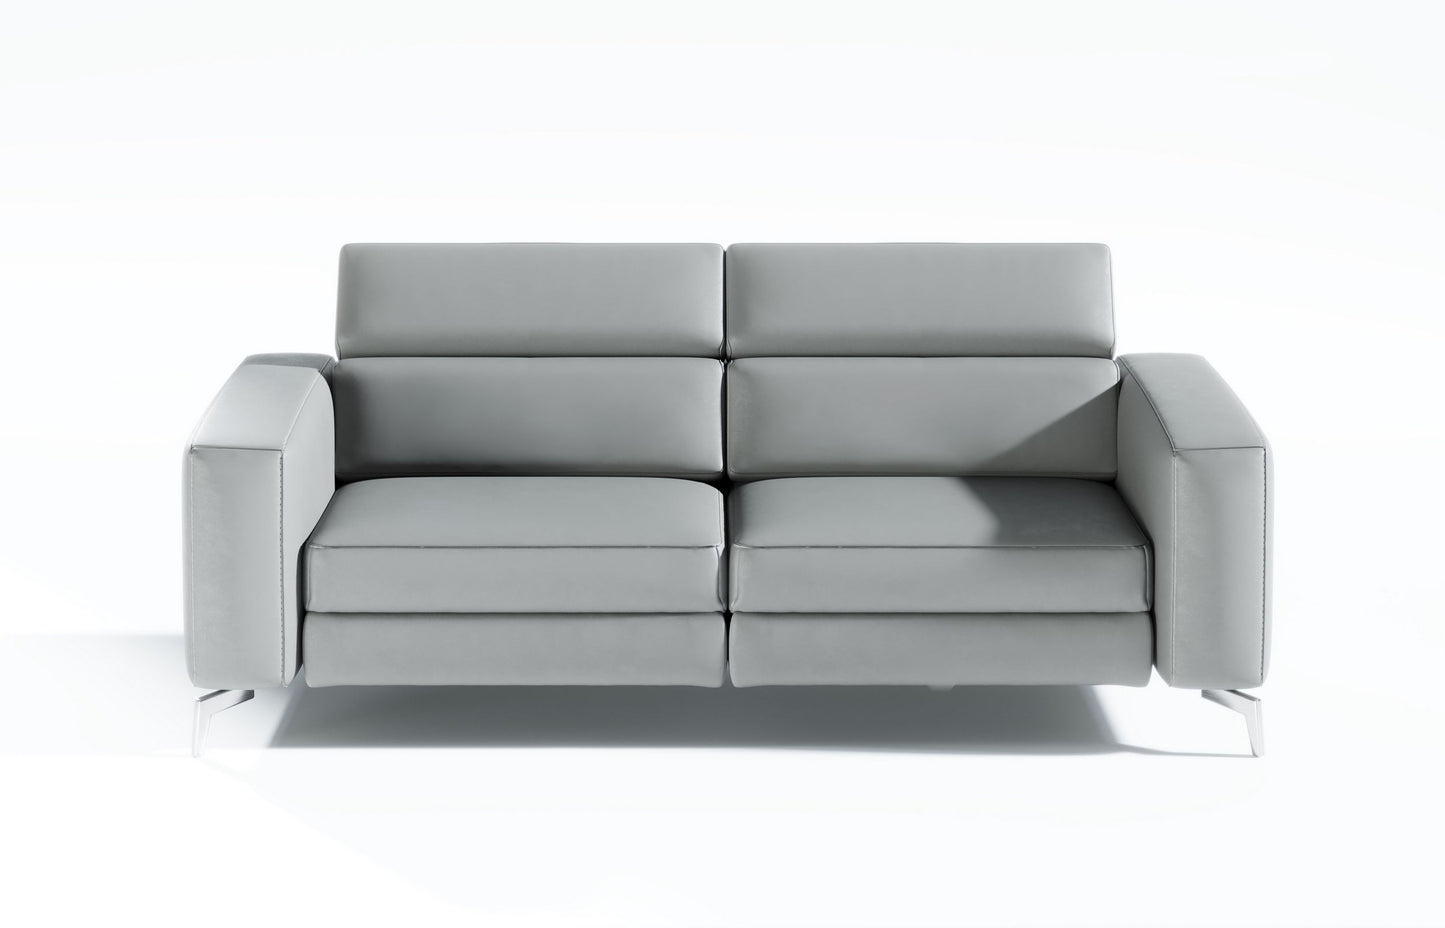 VIG Furniture Coronelli Turin Grey Leather 2 Seater 91" Recliner Sofa